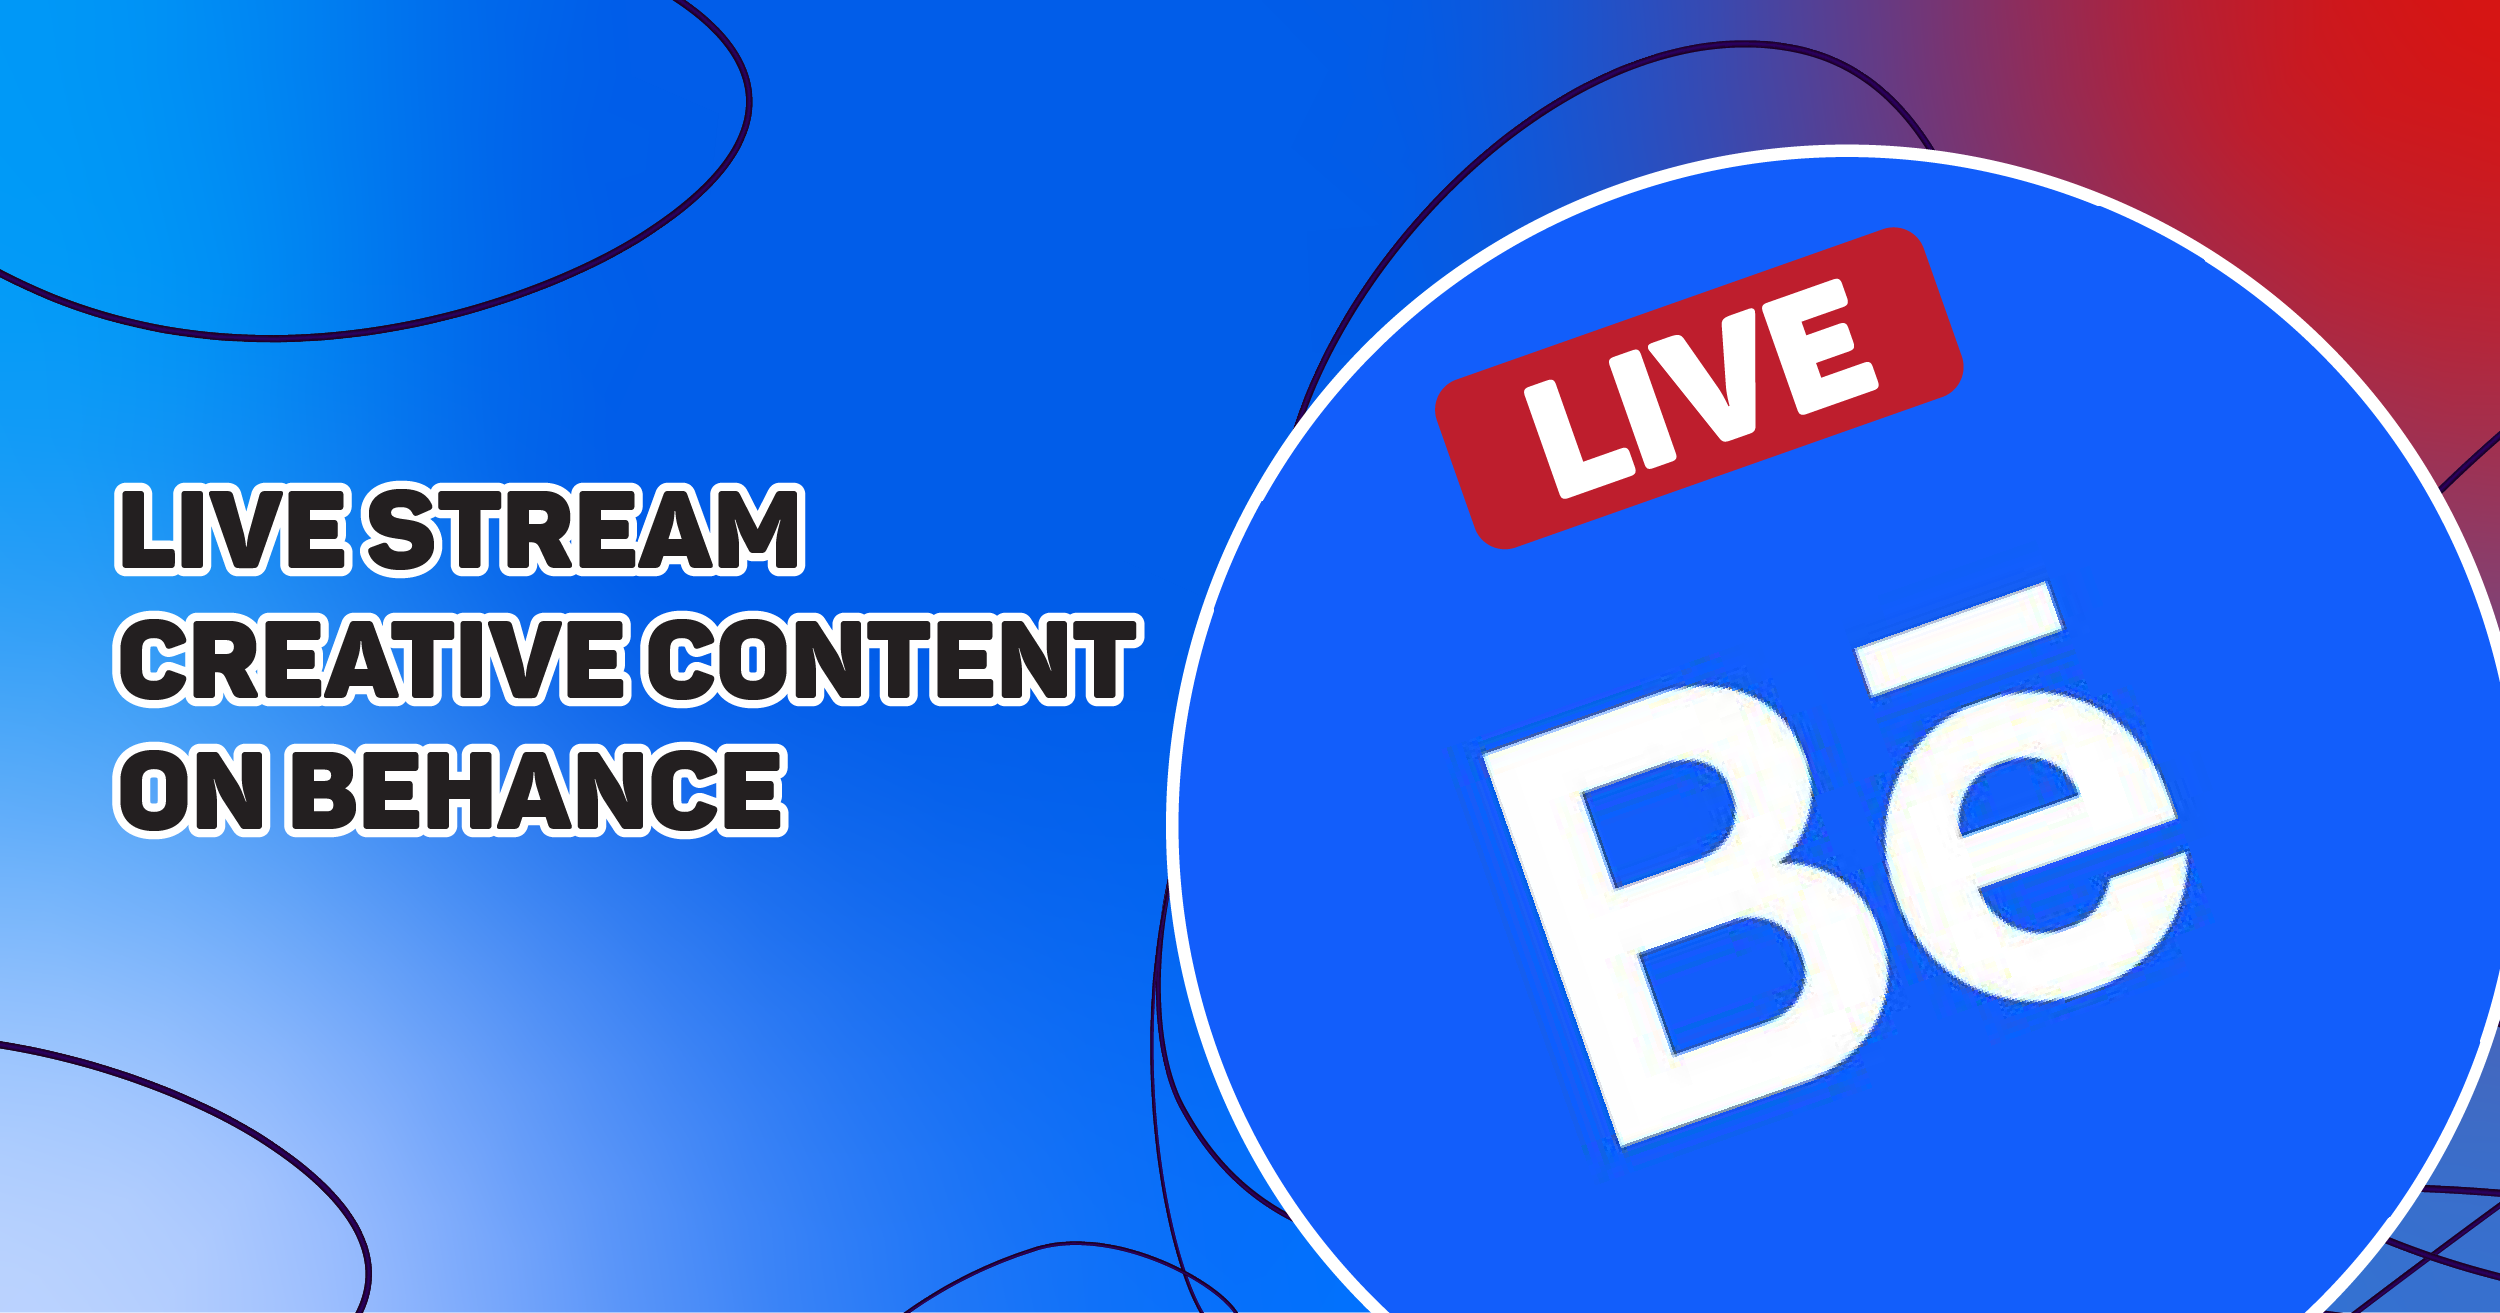 Live streaming on Behance via OneStream Live